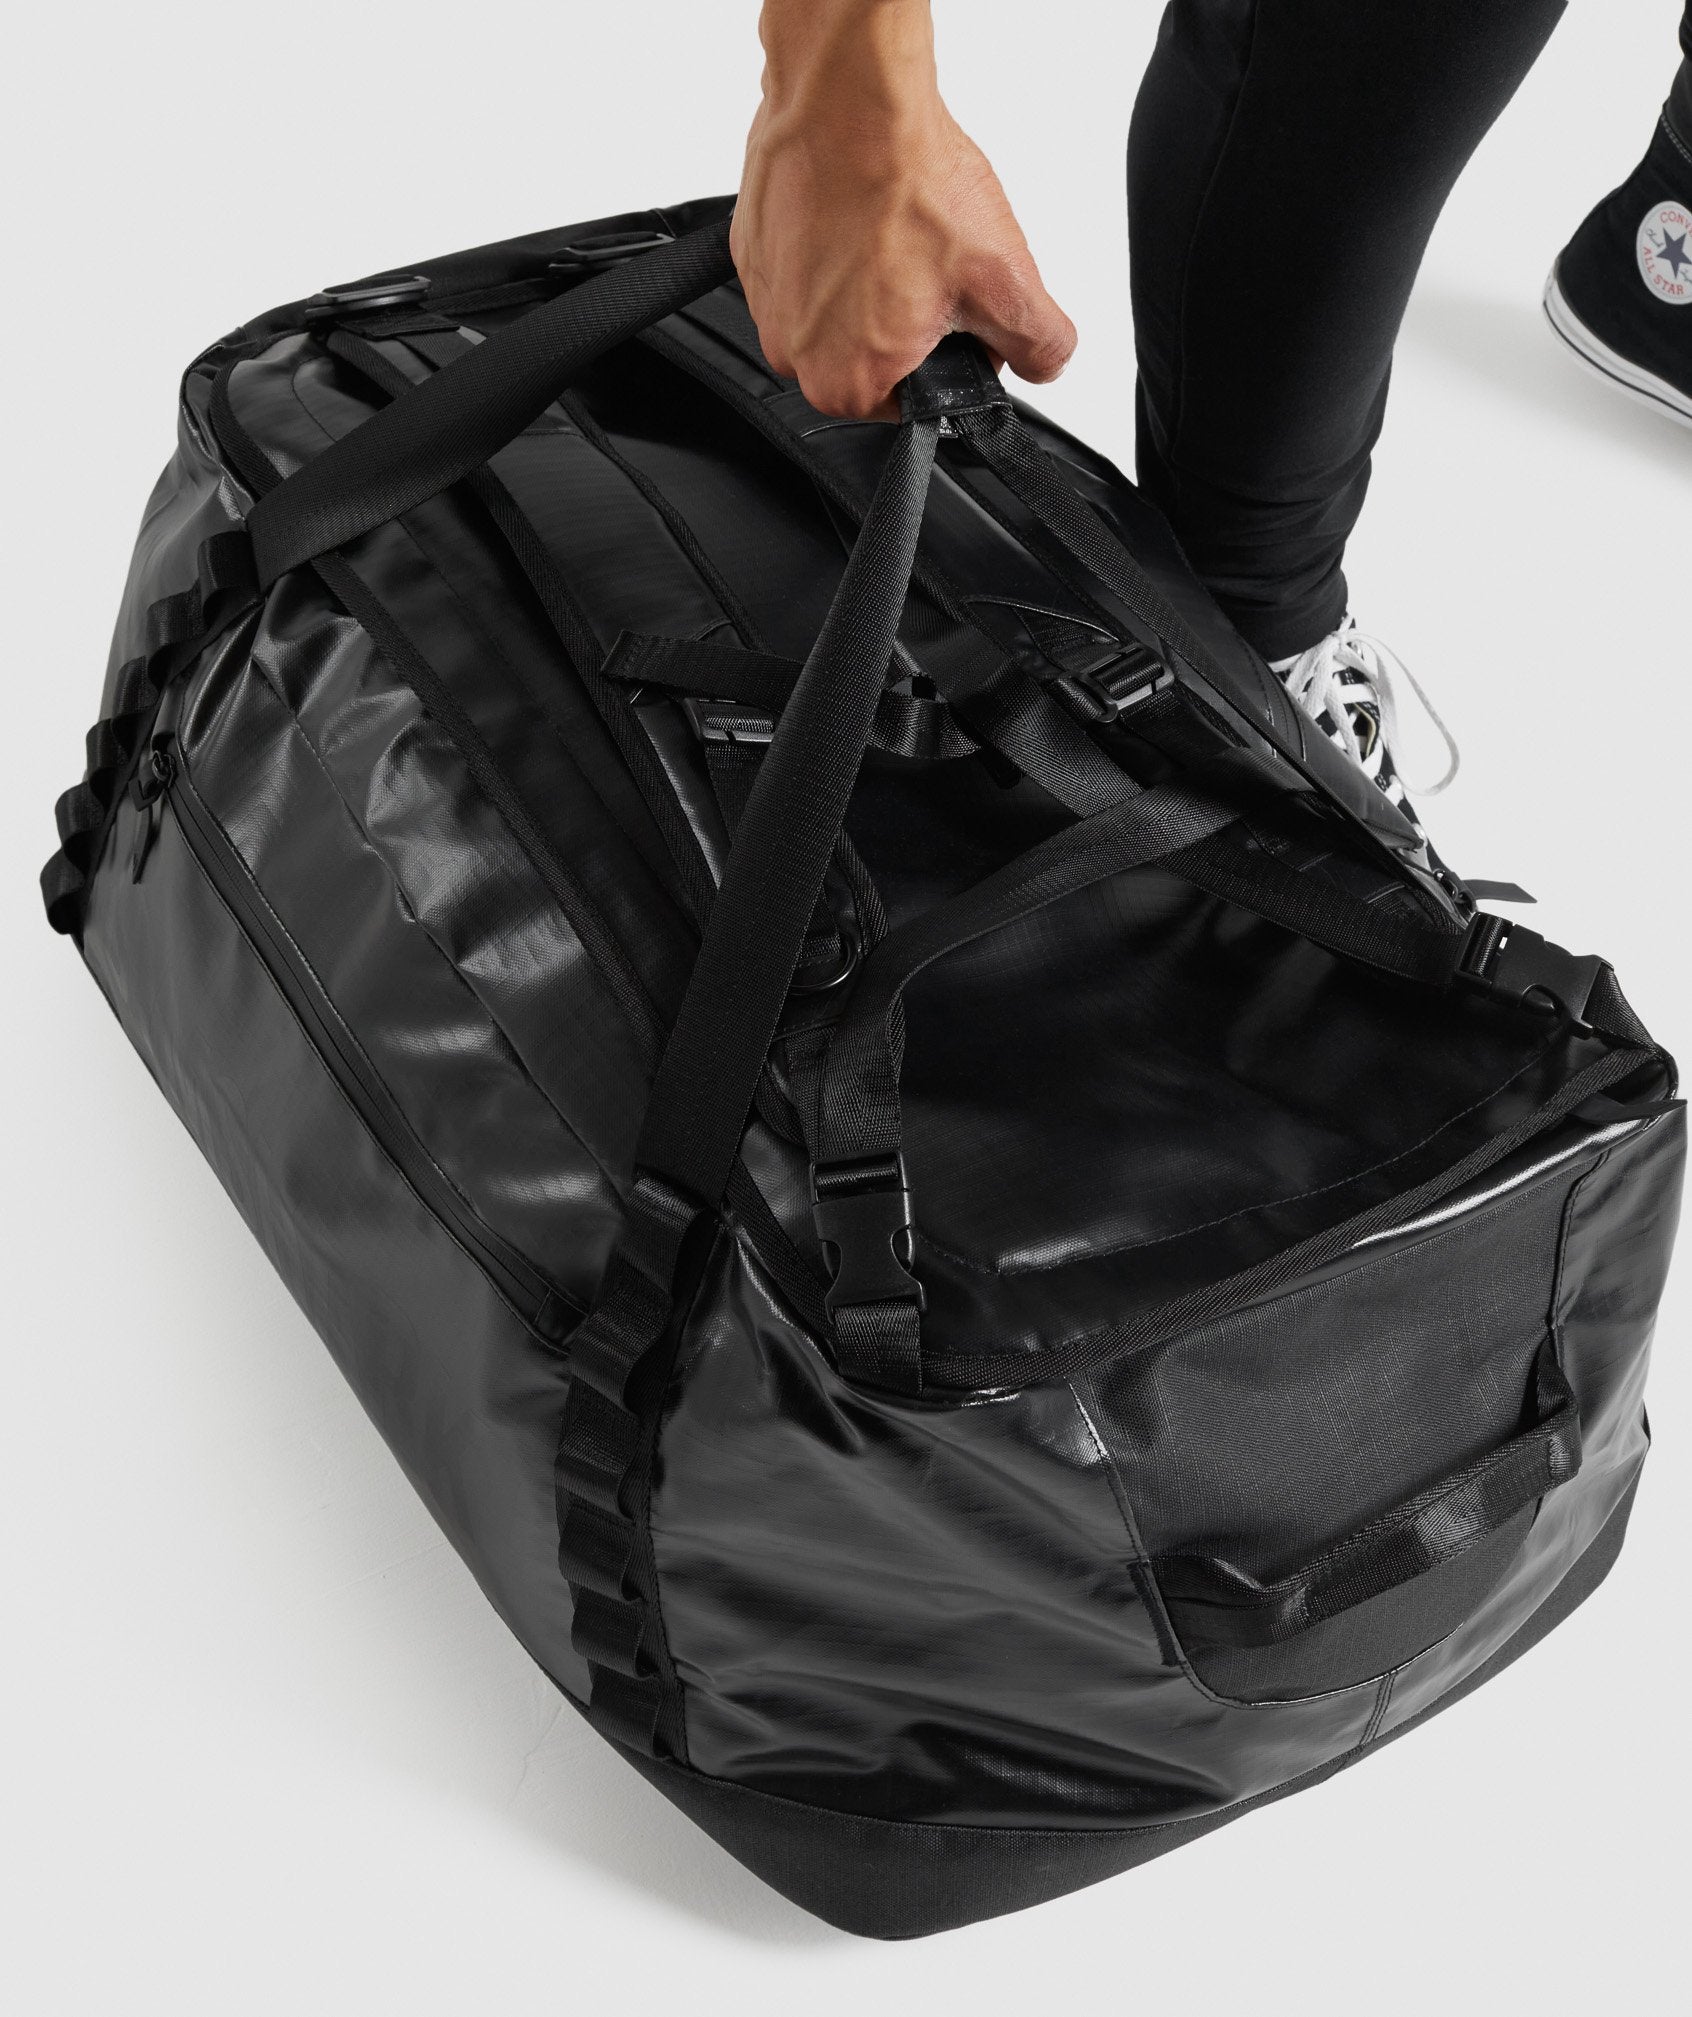 X-Series Duffle Bag in Black - view 5